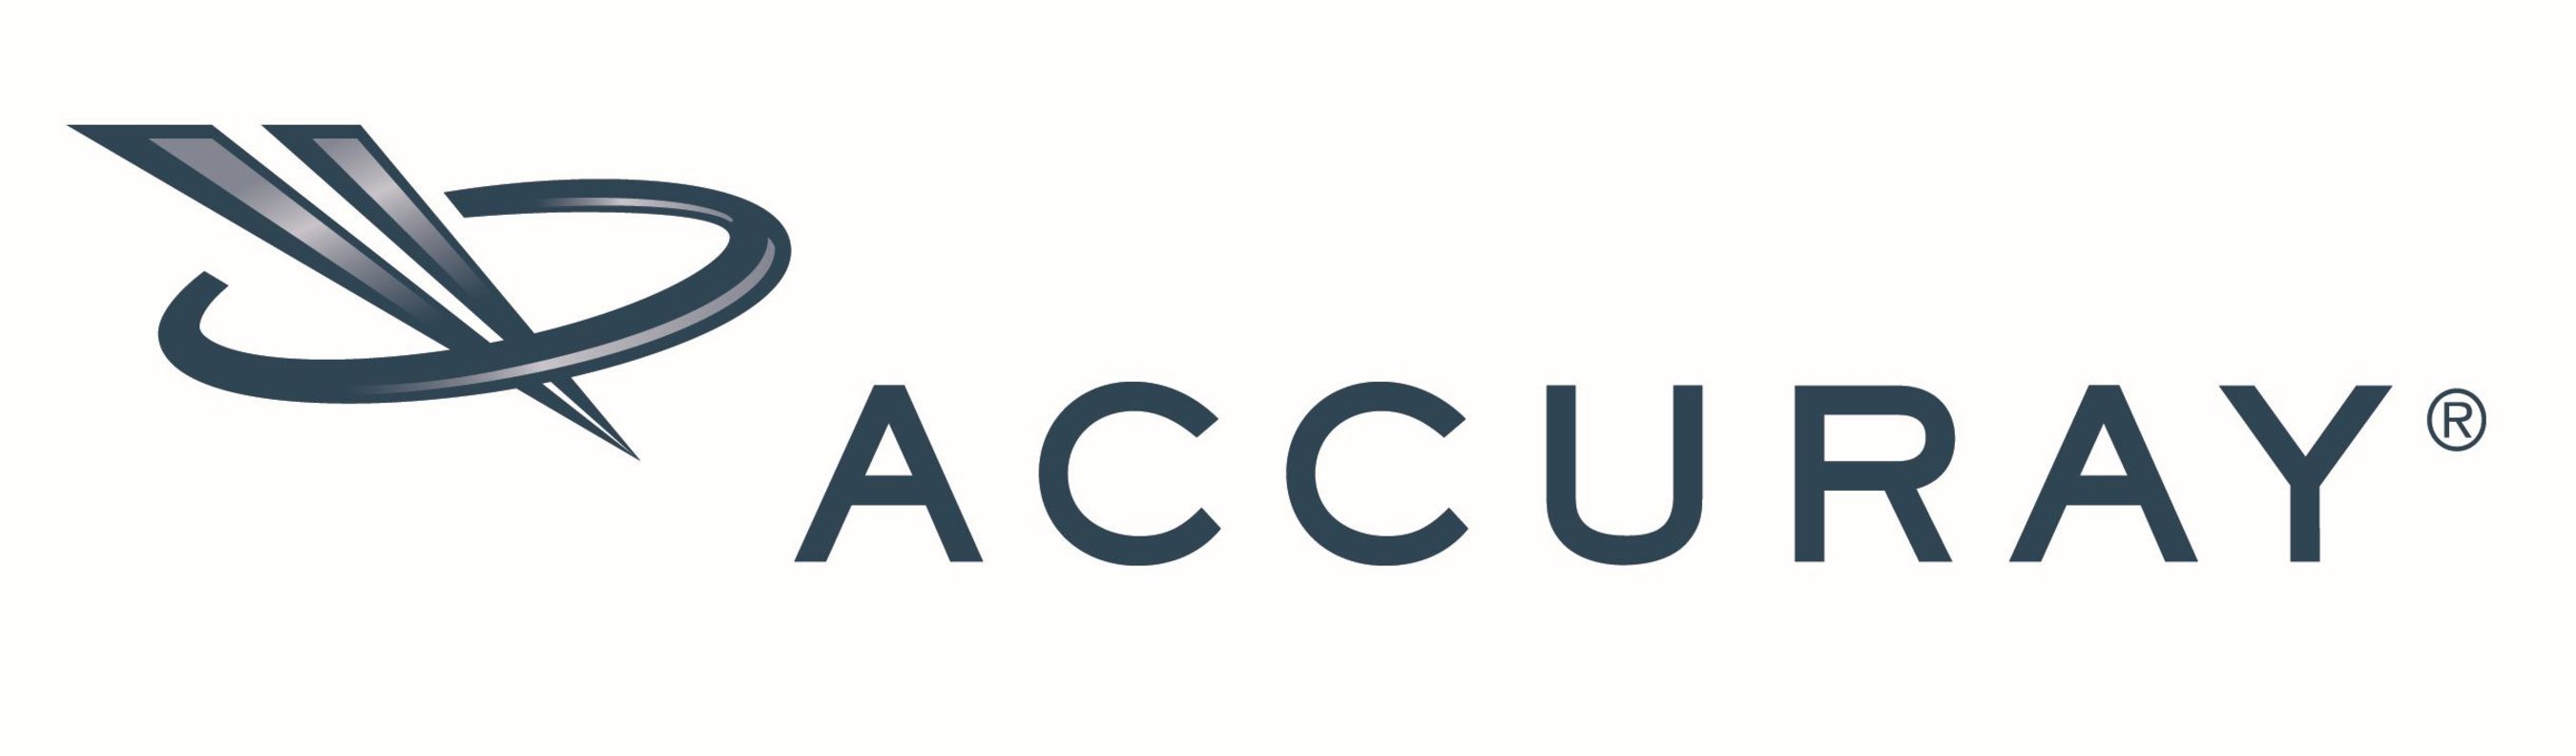 Accuray Logo (PRNewsFoto/Accuray Incorporated) (PRNewsFoto/Accuray Incorporated)